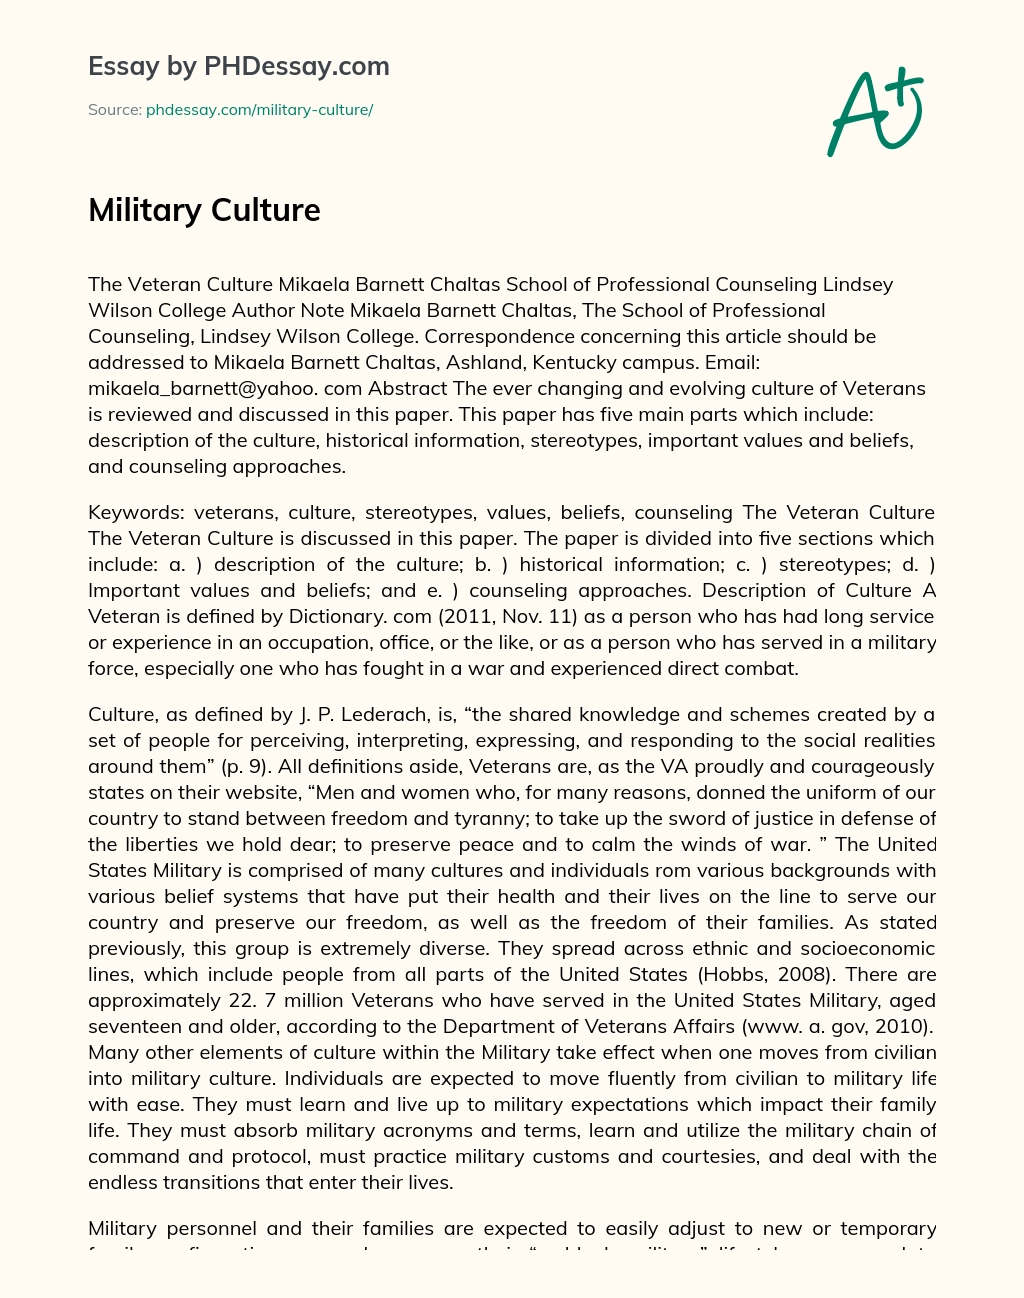 Military Culture essay